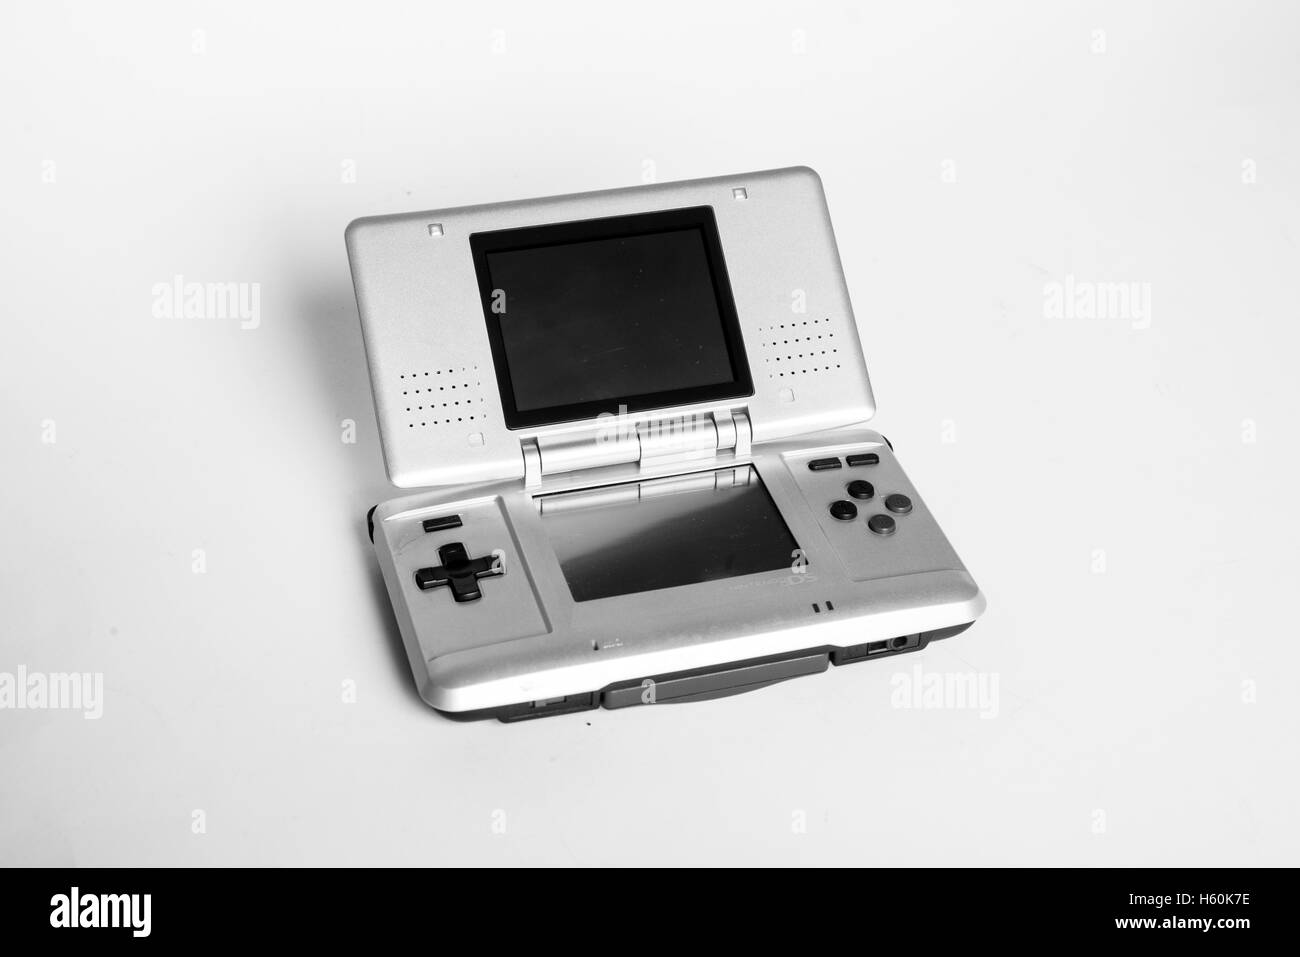 Nintendo Black and White Stock Photos & Images - Alamy